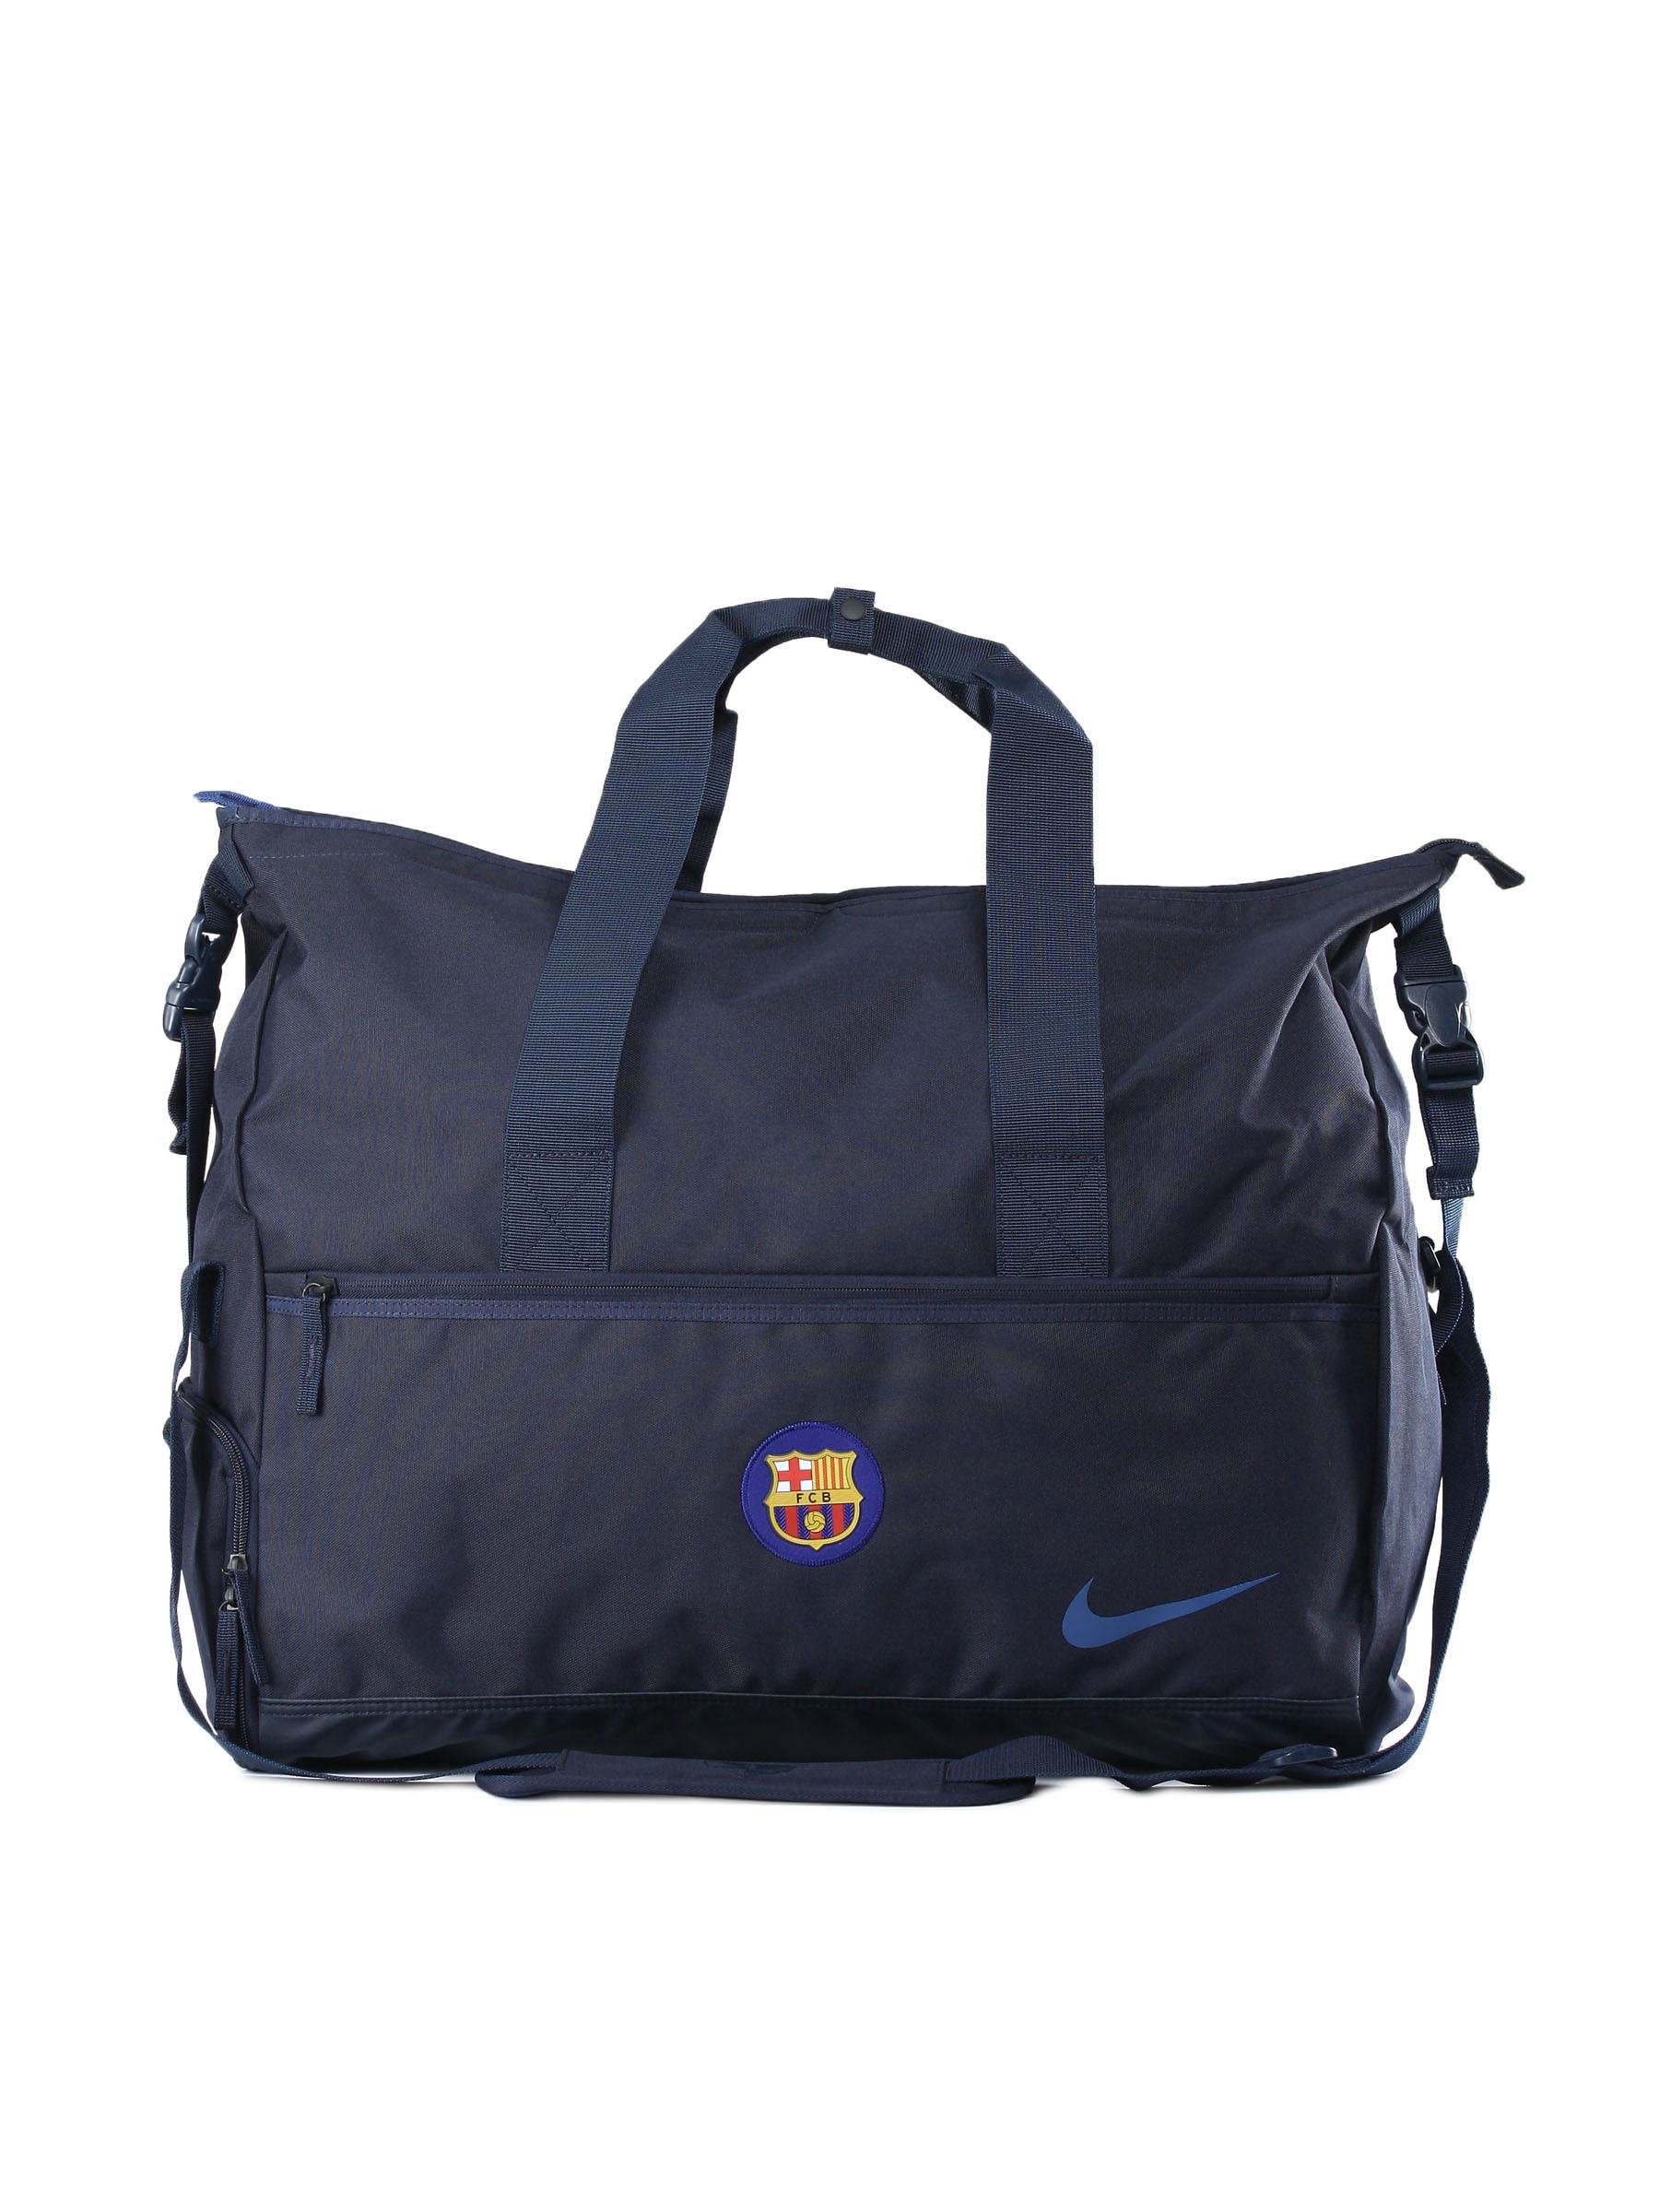 Nike Unisex Solid Navy Blue Bag